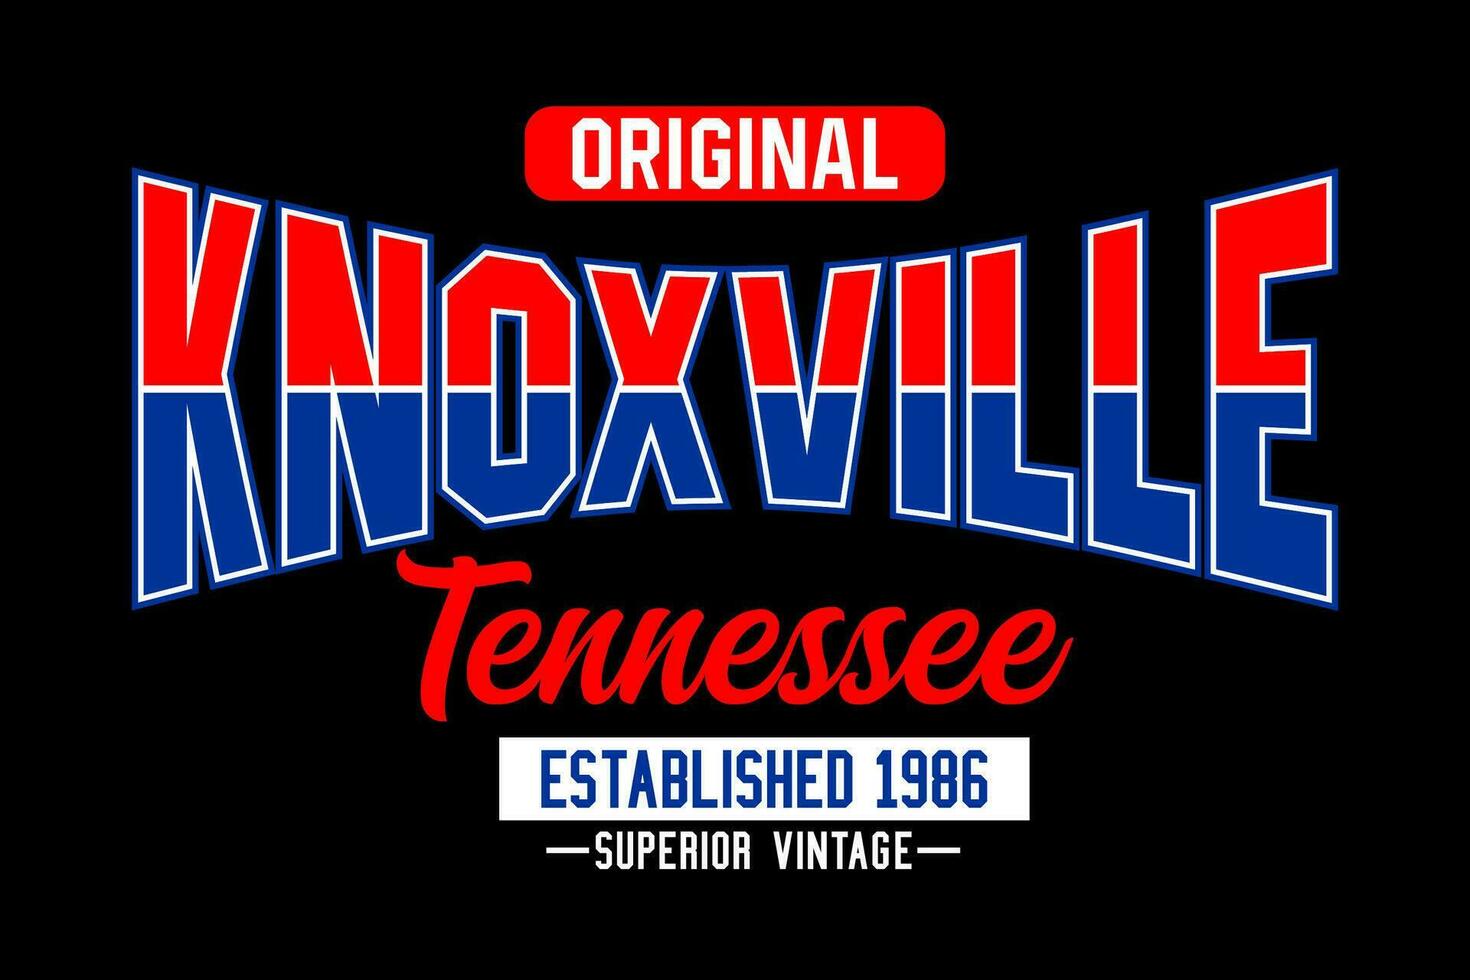 Knoxville Tennessee vintage faculdade, para impressão em t camisas etc. vetor